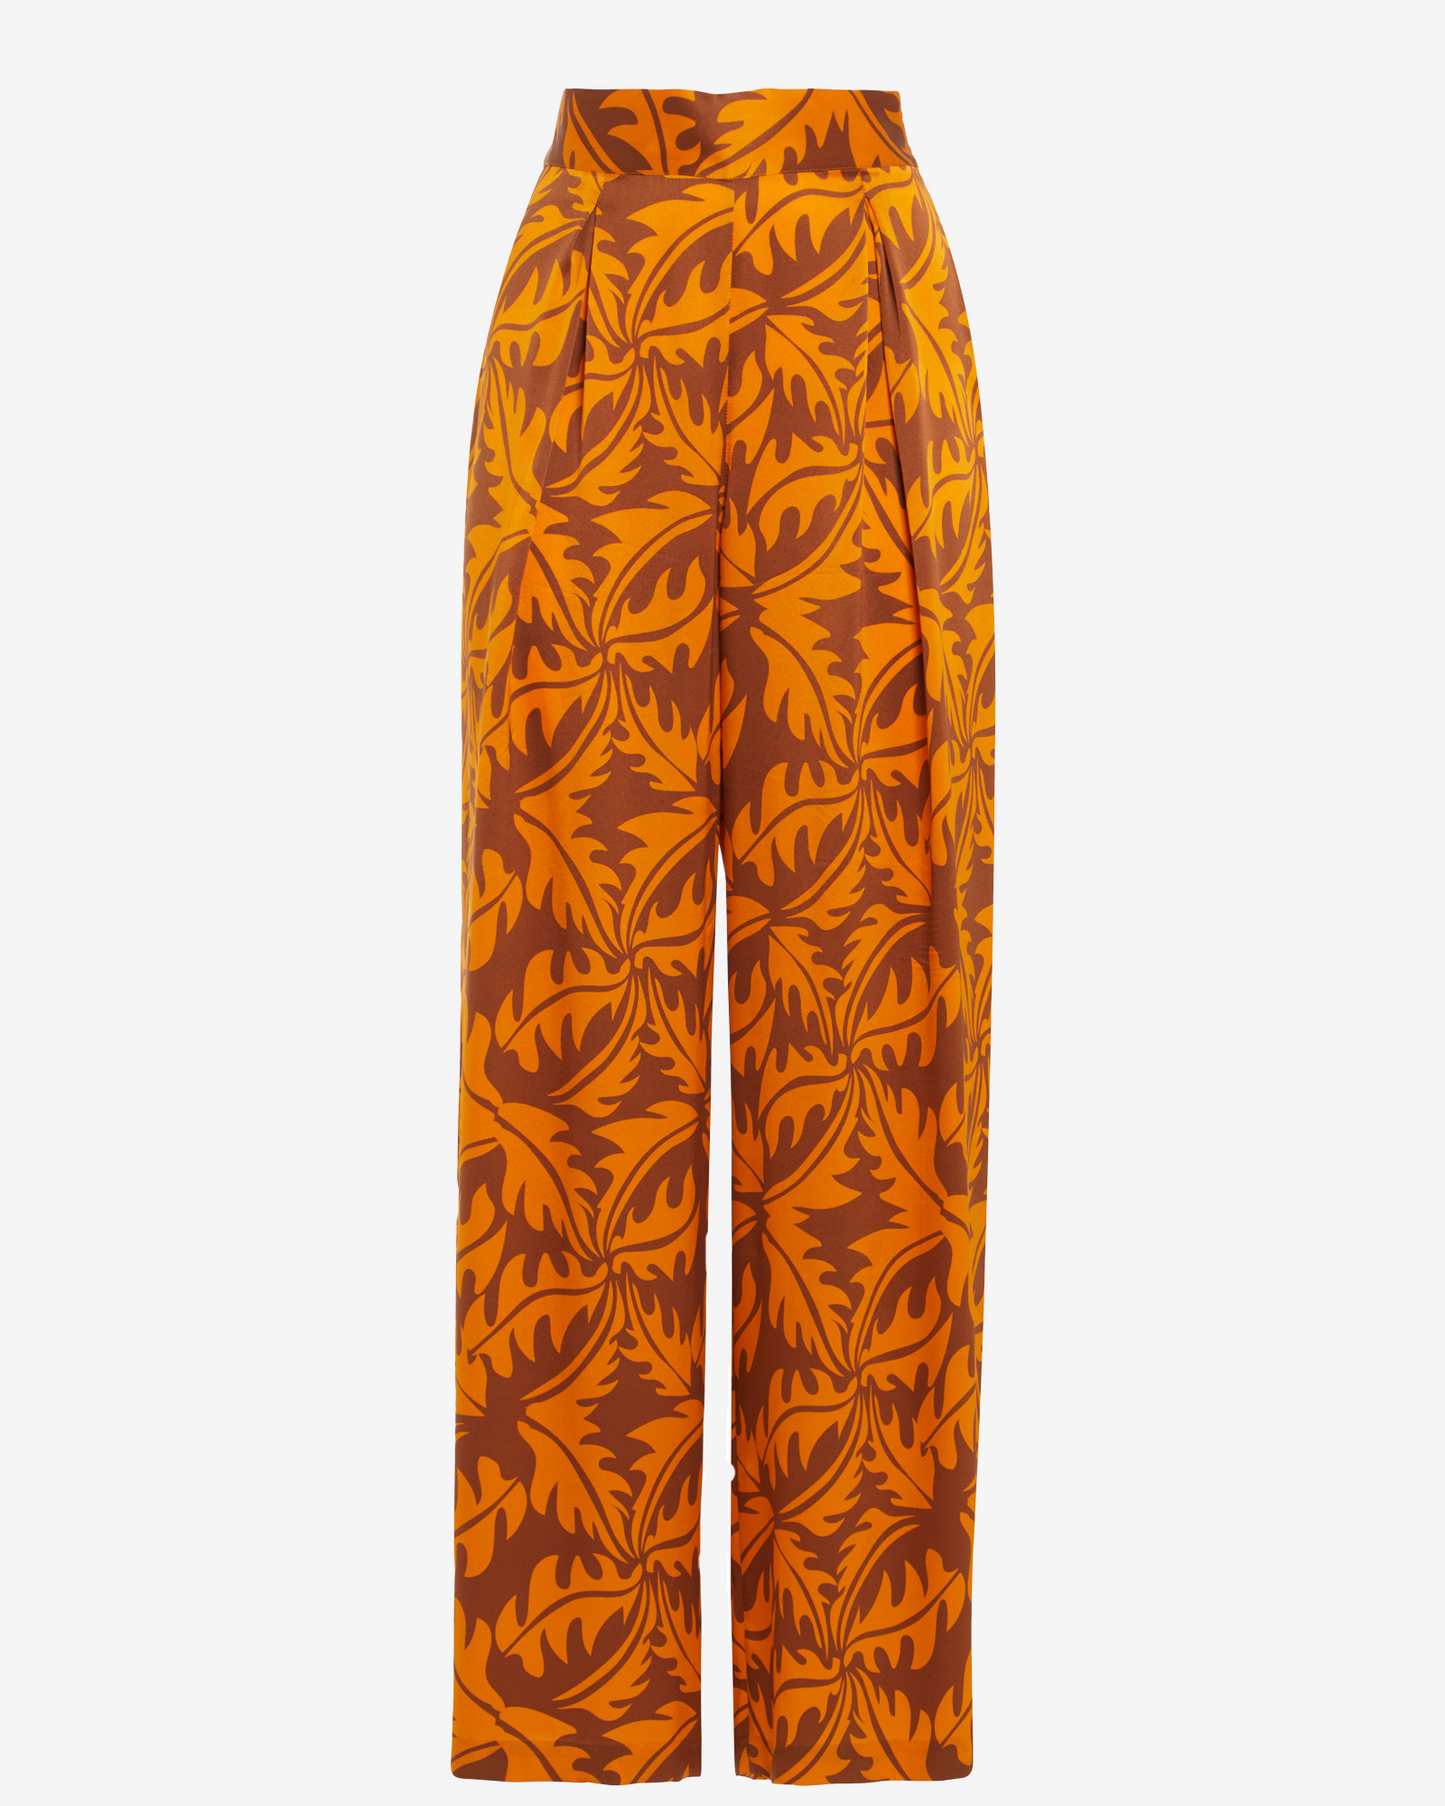 The Orange Psychedelic Silk Pants